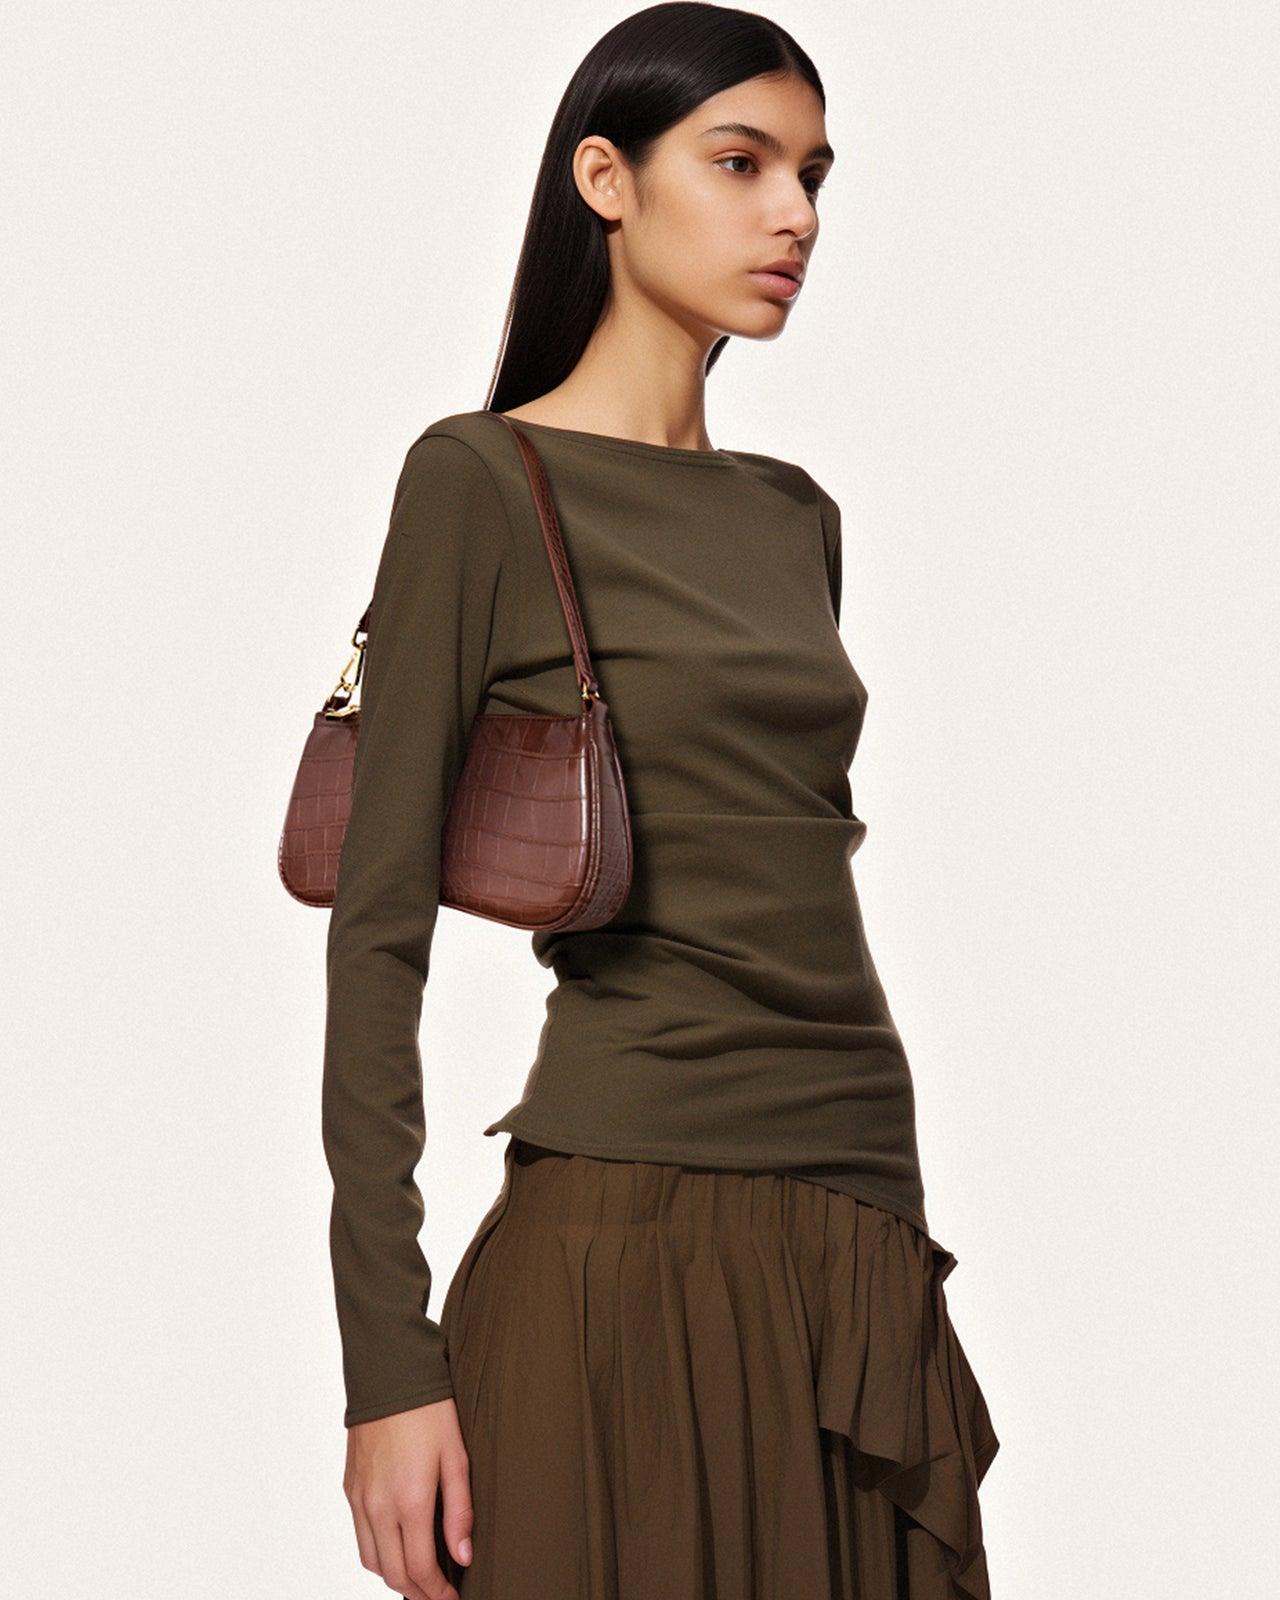 JW PEI Eva Shoulder Bag  Sacs à main mode, Sac, Sac vintage